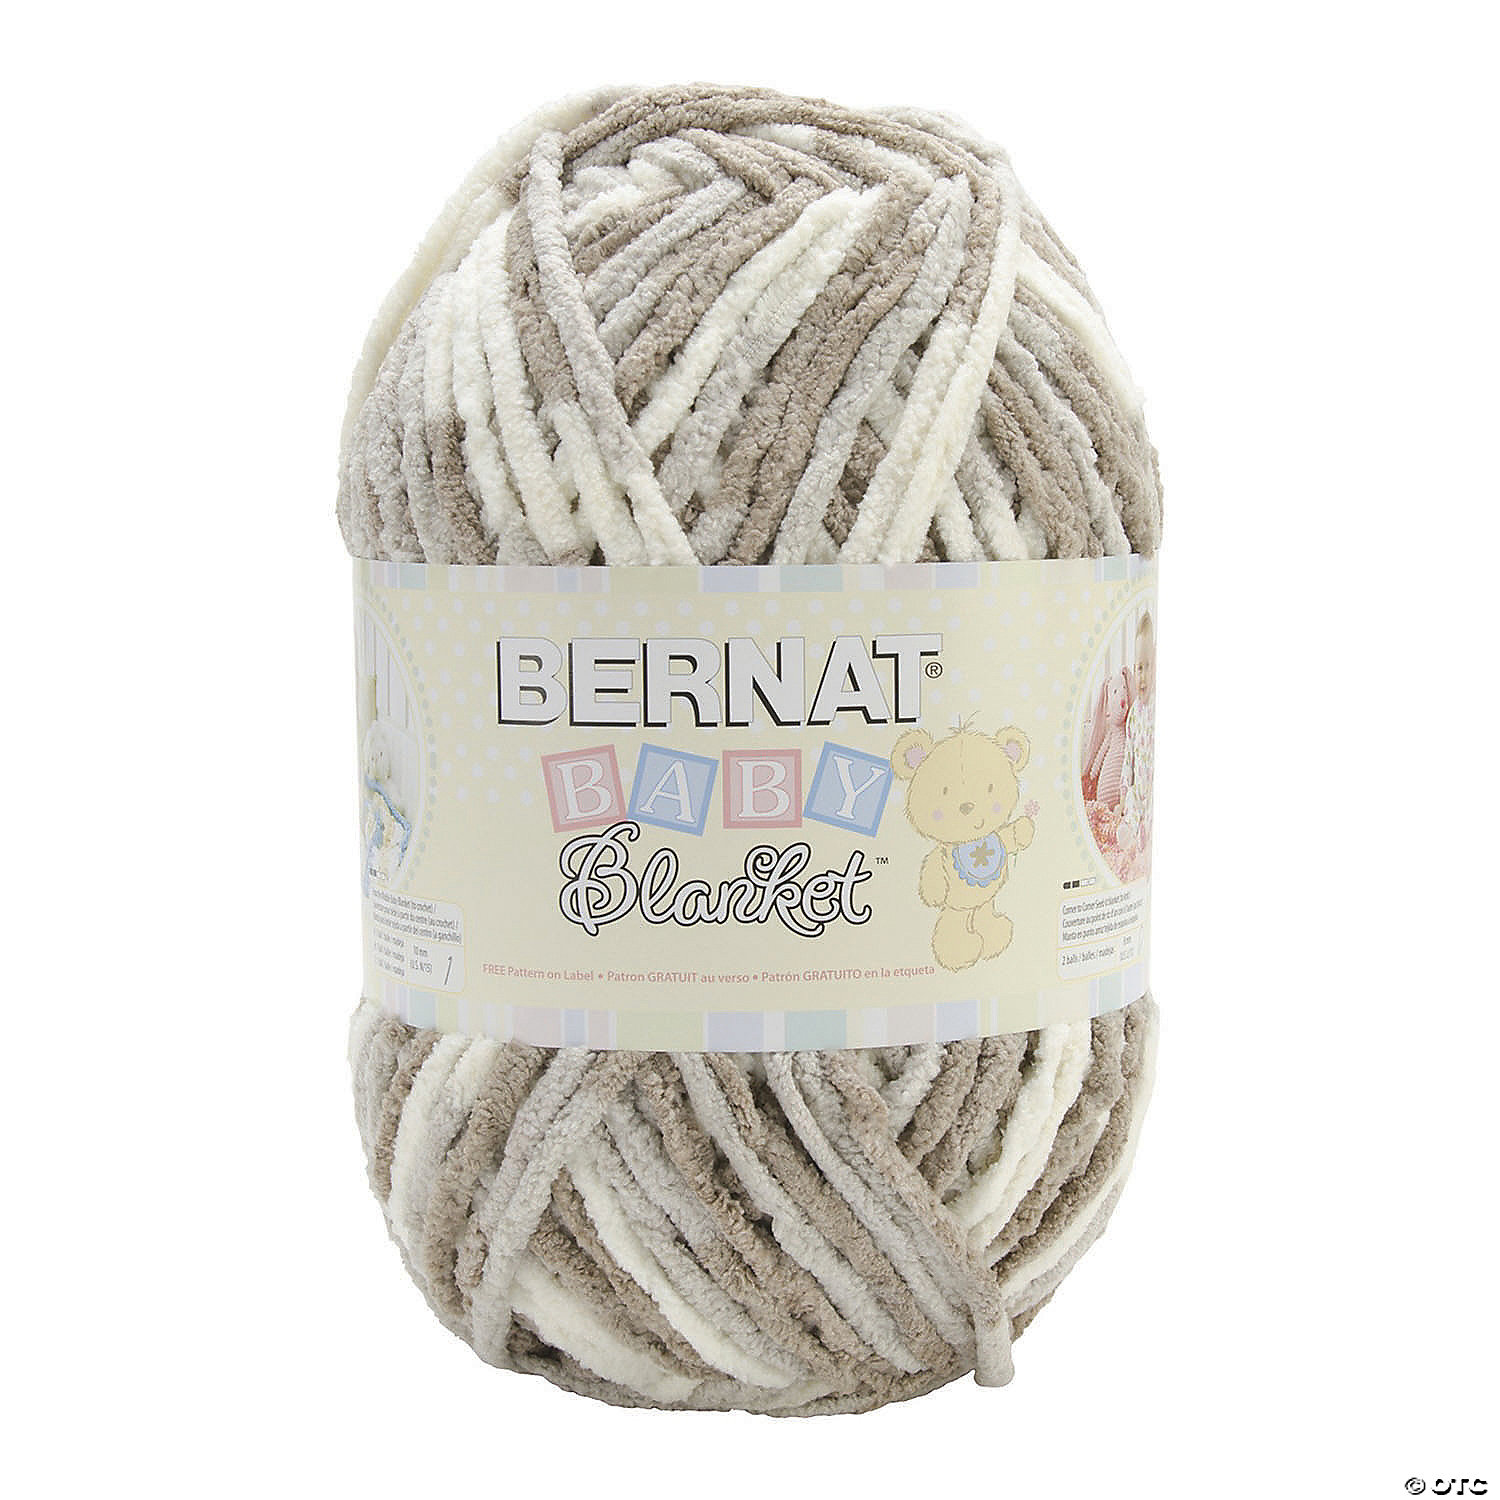 Bernat blanket big yarn patterns